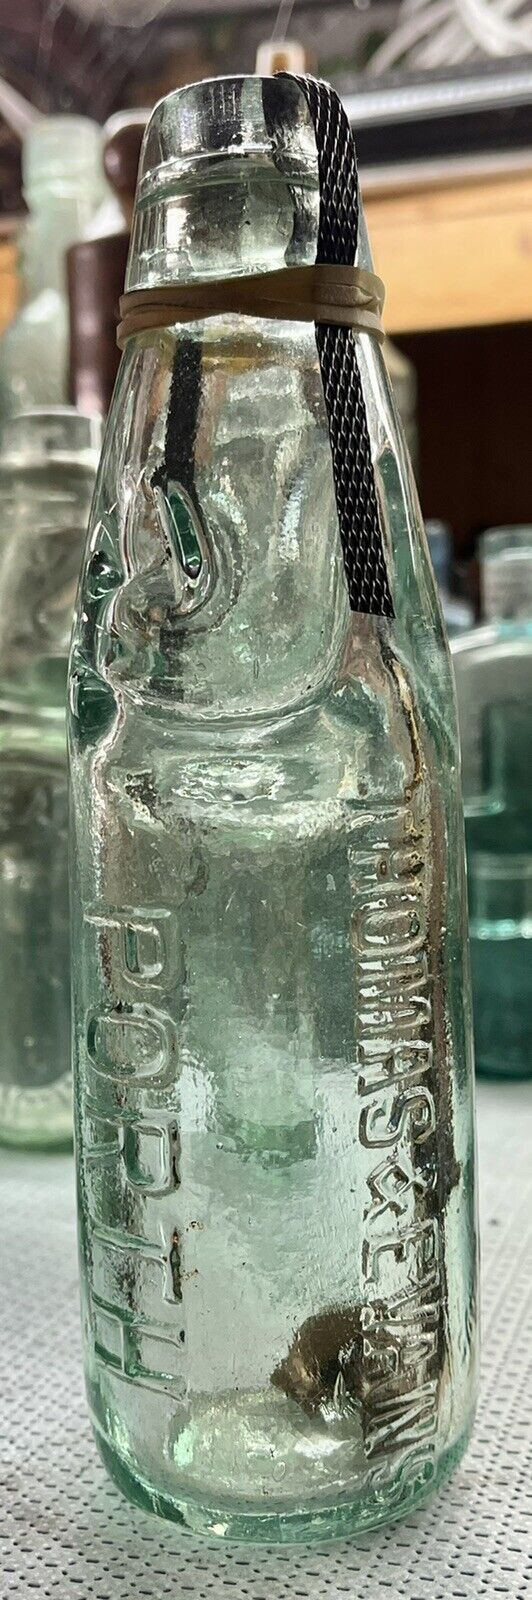 1895 Codd Marble Mineral Bottle - Rare BEAVIS PATENT - 6oz - PORTH (H511)